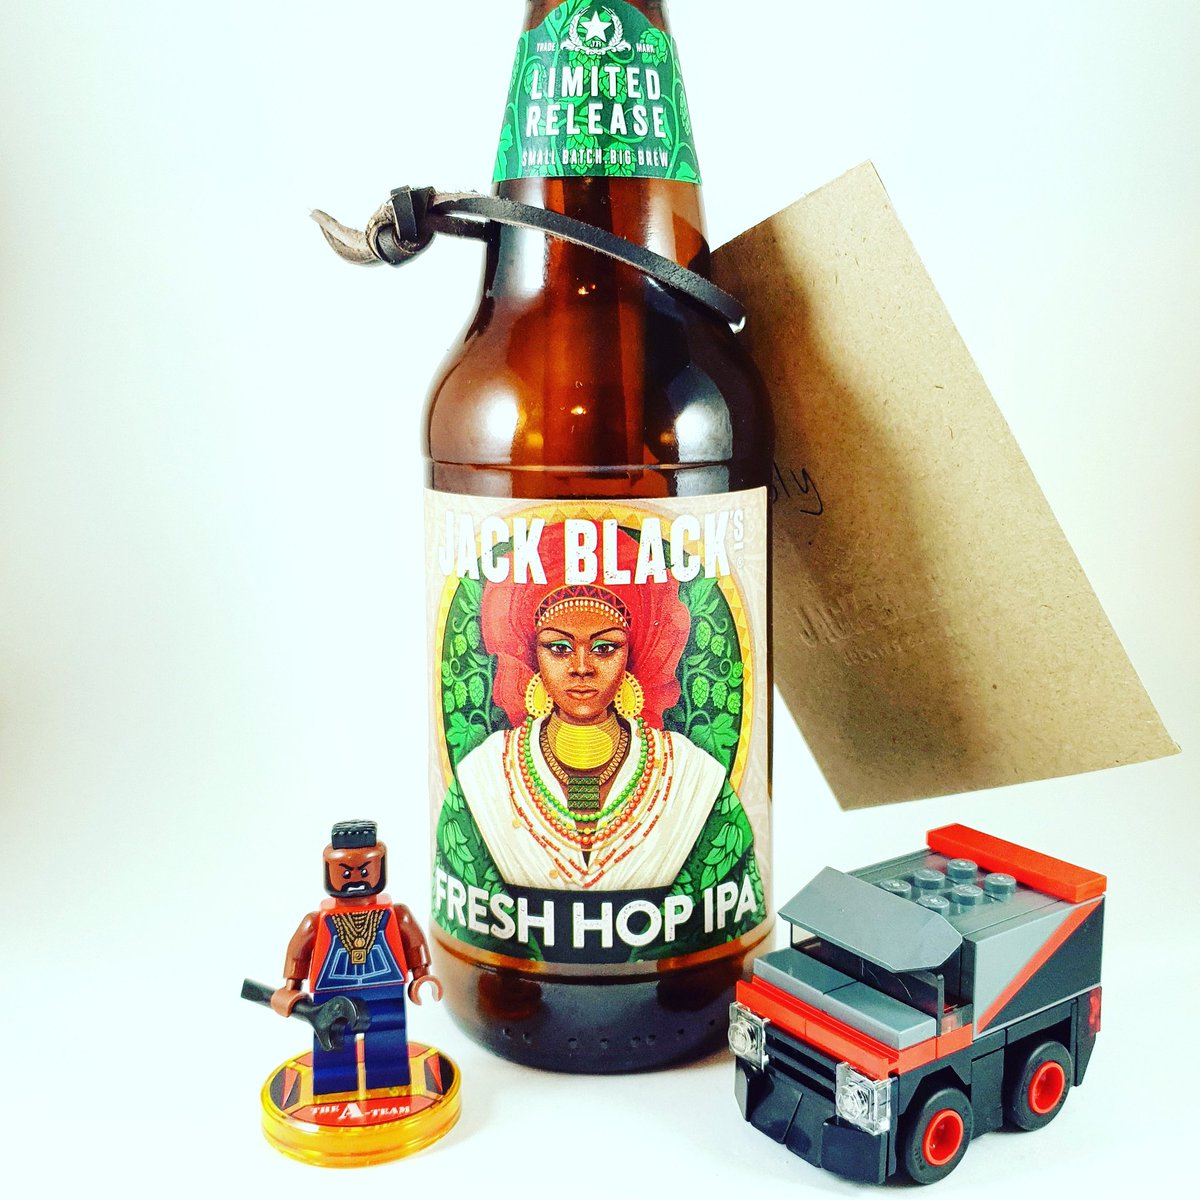 👸🍺🛠️
I pity the fool that misses the launch of Jack Black's Fresh Hop IPA!
WHEN: 20 April, Friday, 6PM
WHERE: Jack Black's Brewing Company
🤓🍻
#JackBlackBeer #FreshHopIPA #LimitedRelease #TheATeam #BABaracus #LEGO #LEGODimensions #TastingLeague
📸 instagram.com/p/BhuYPJZFxPh/